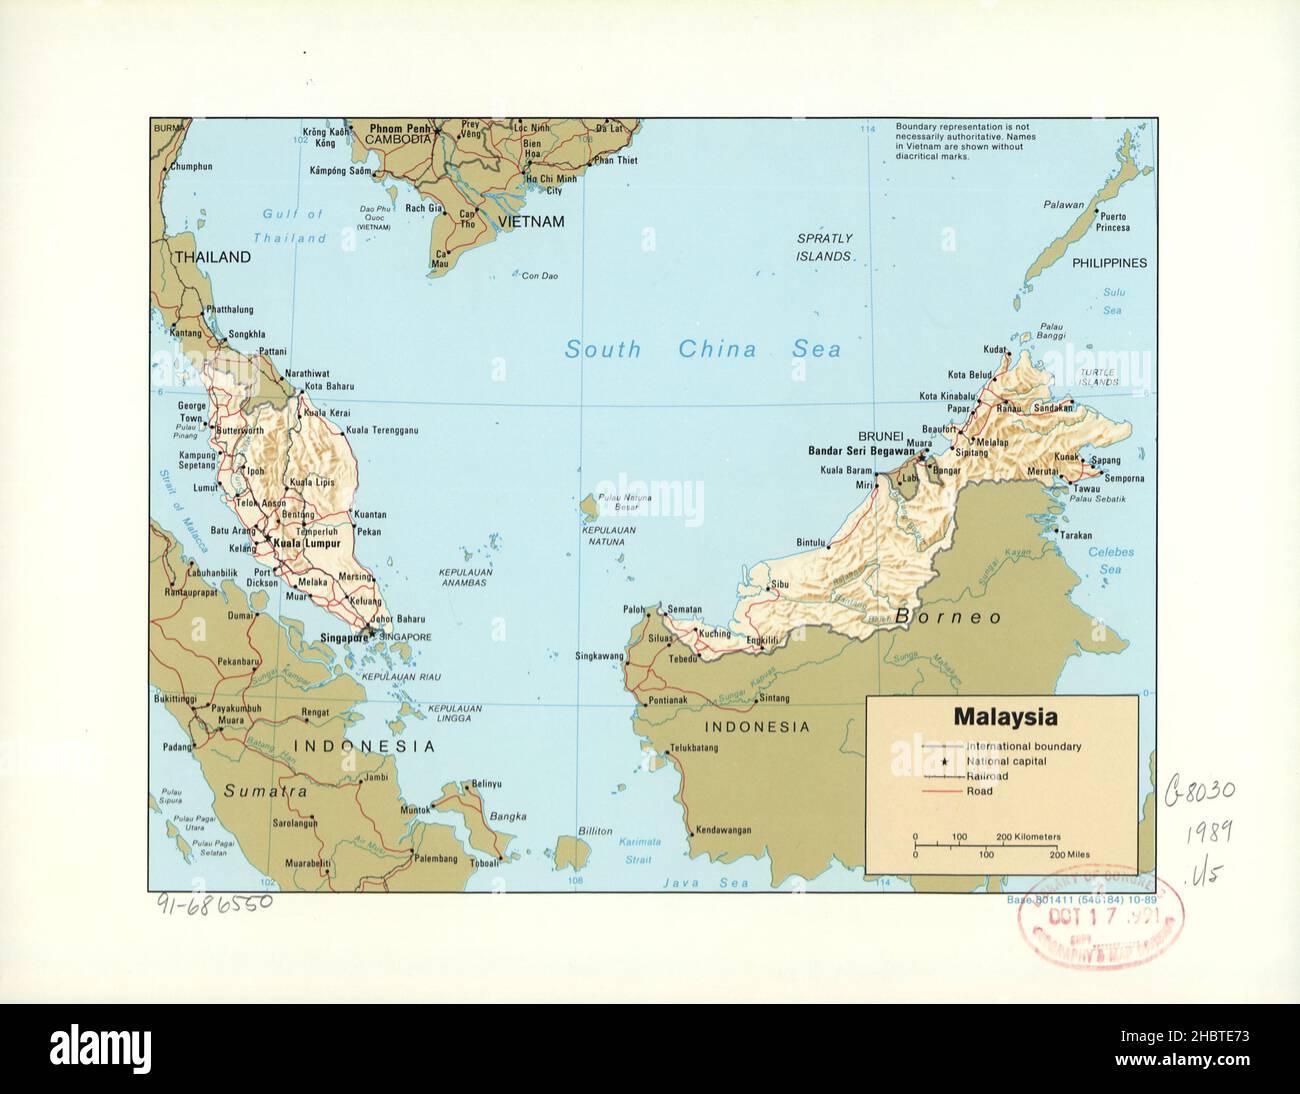 Map Of Malaysia Ca 1989 2HBTE73 